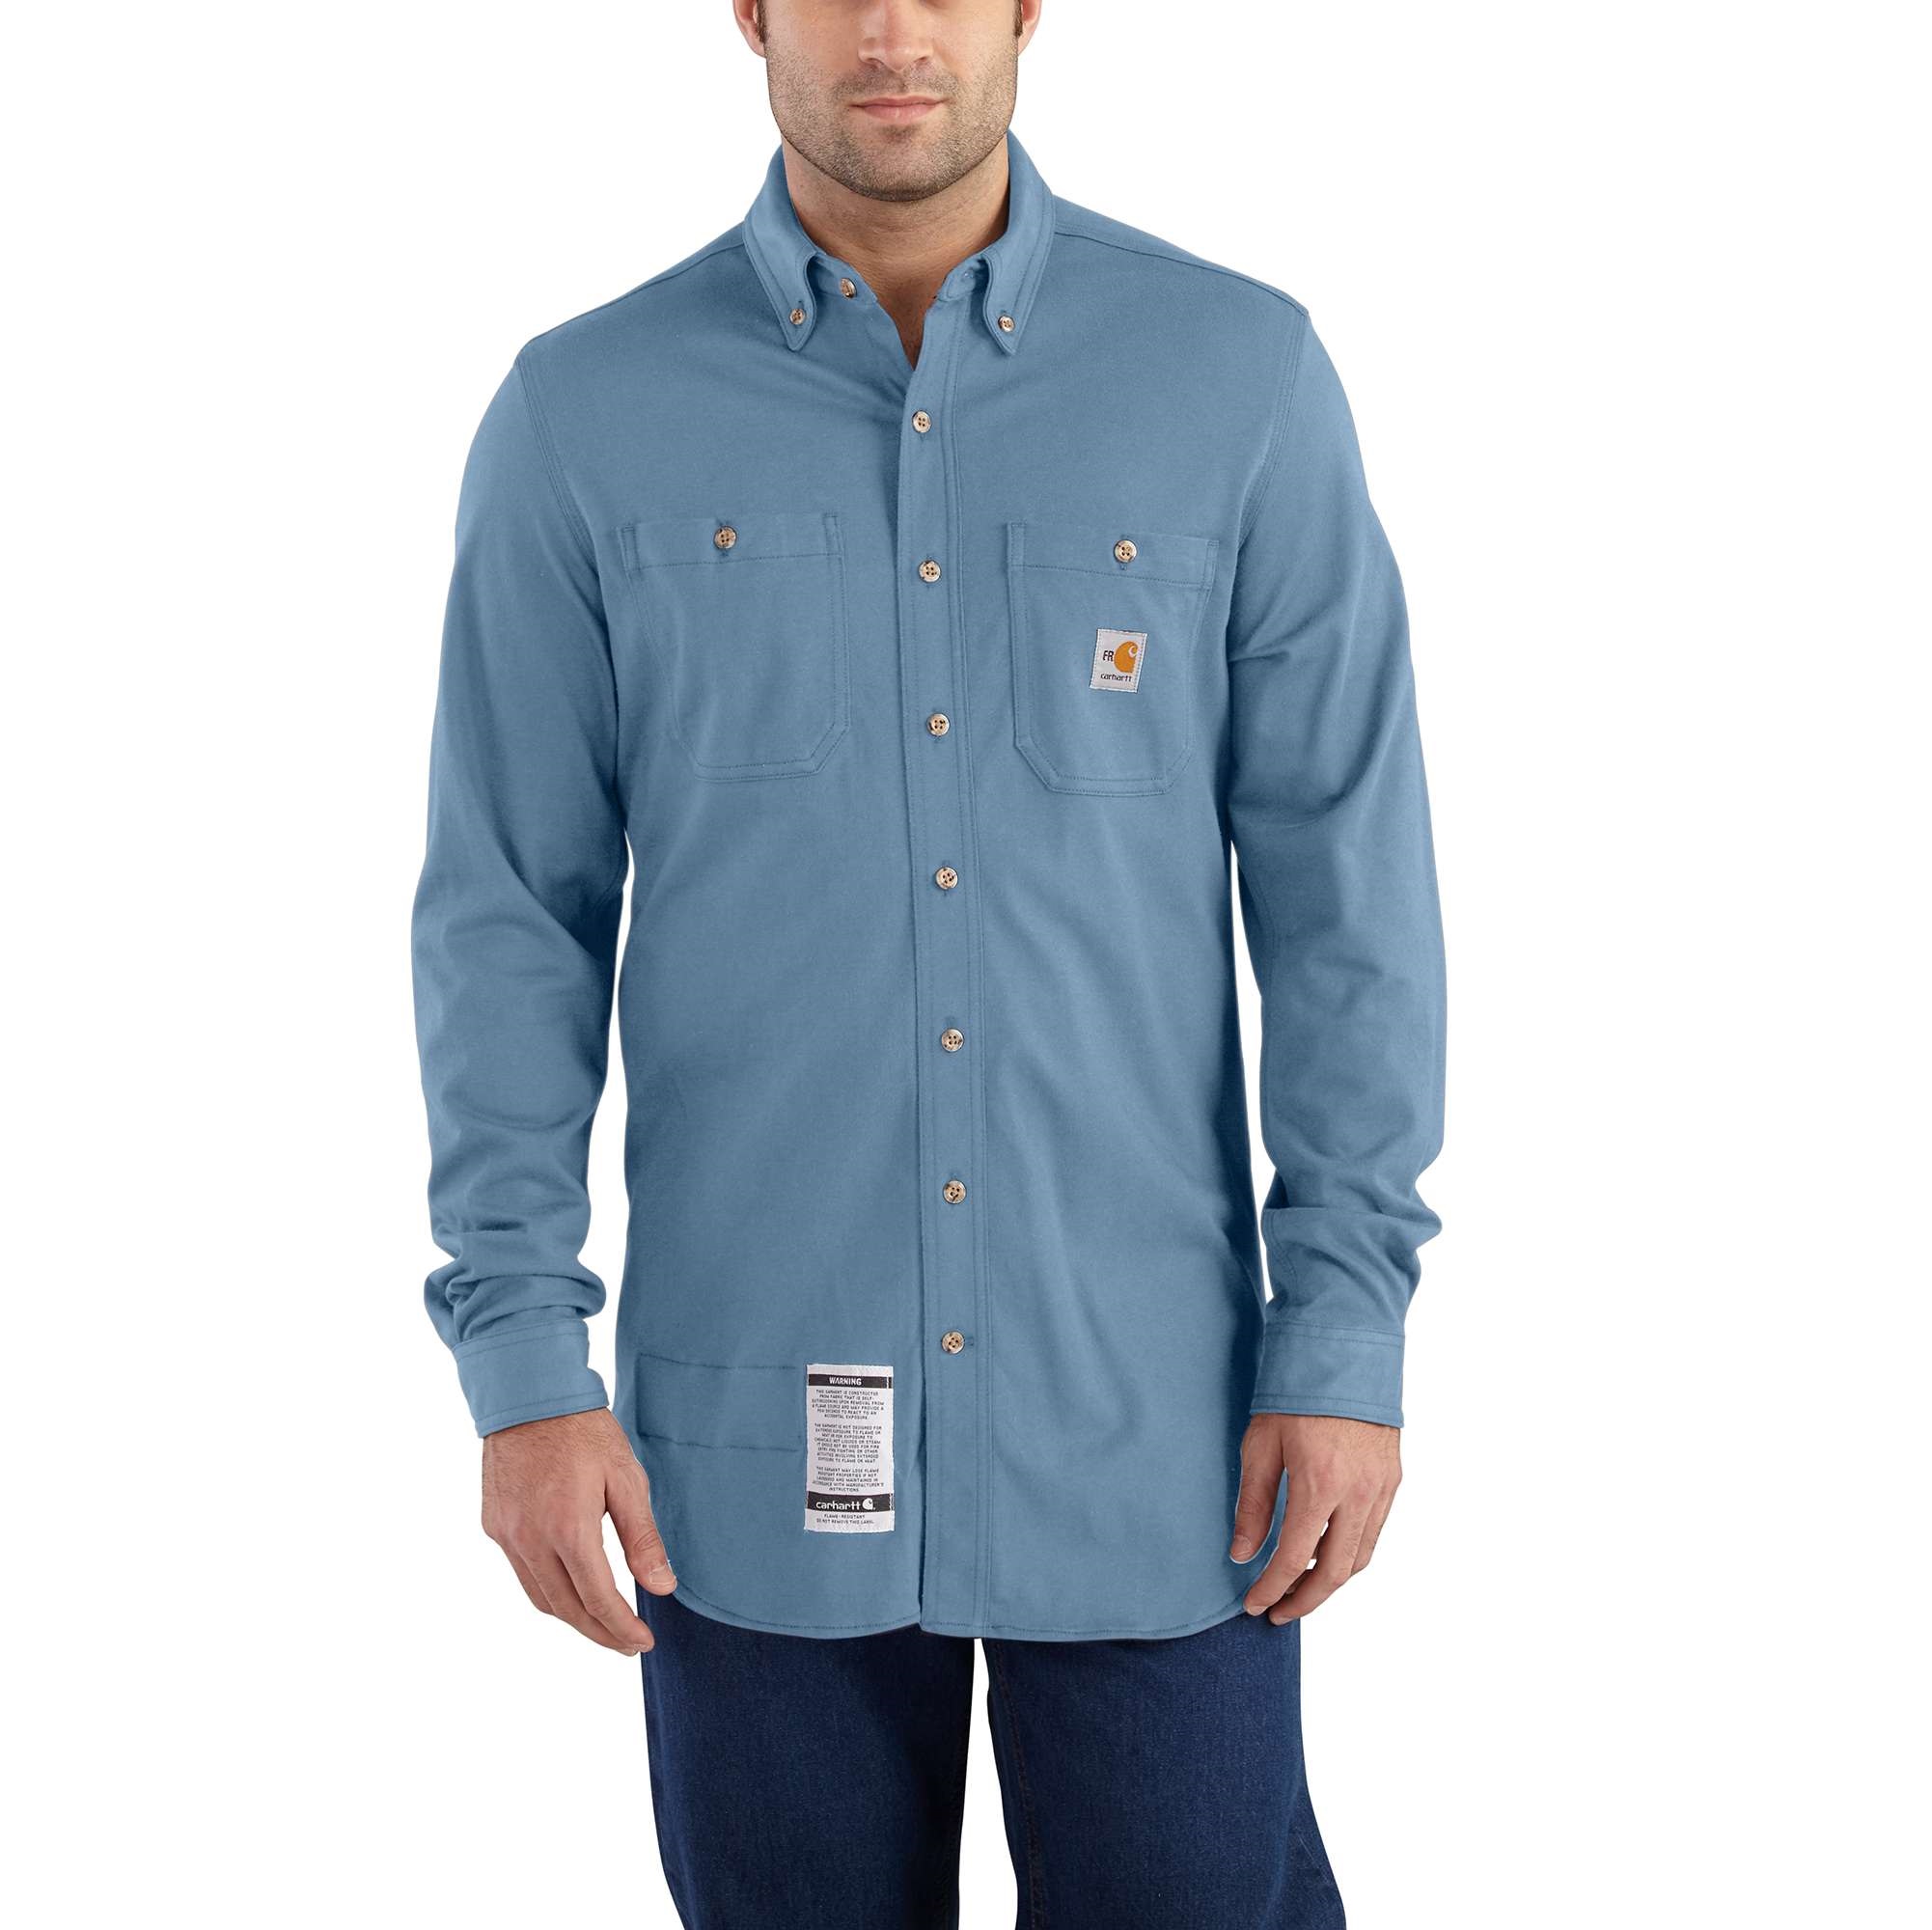 Carhartt Force Cotton Hybrid Shirt in Medium Blue